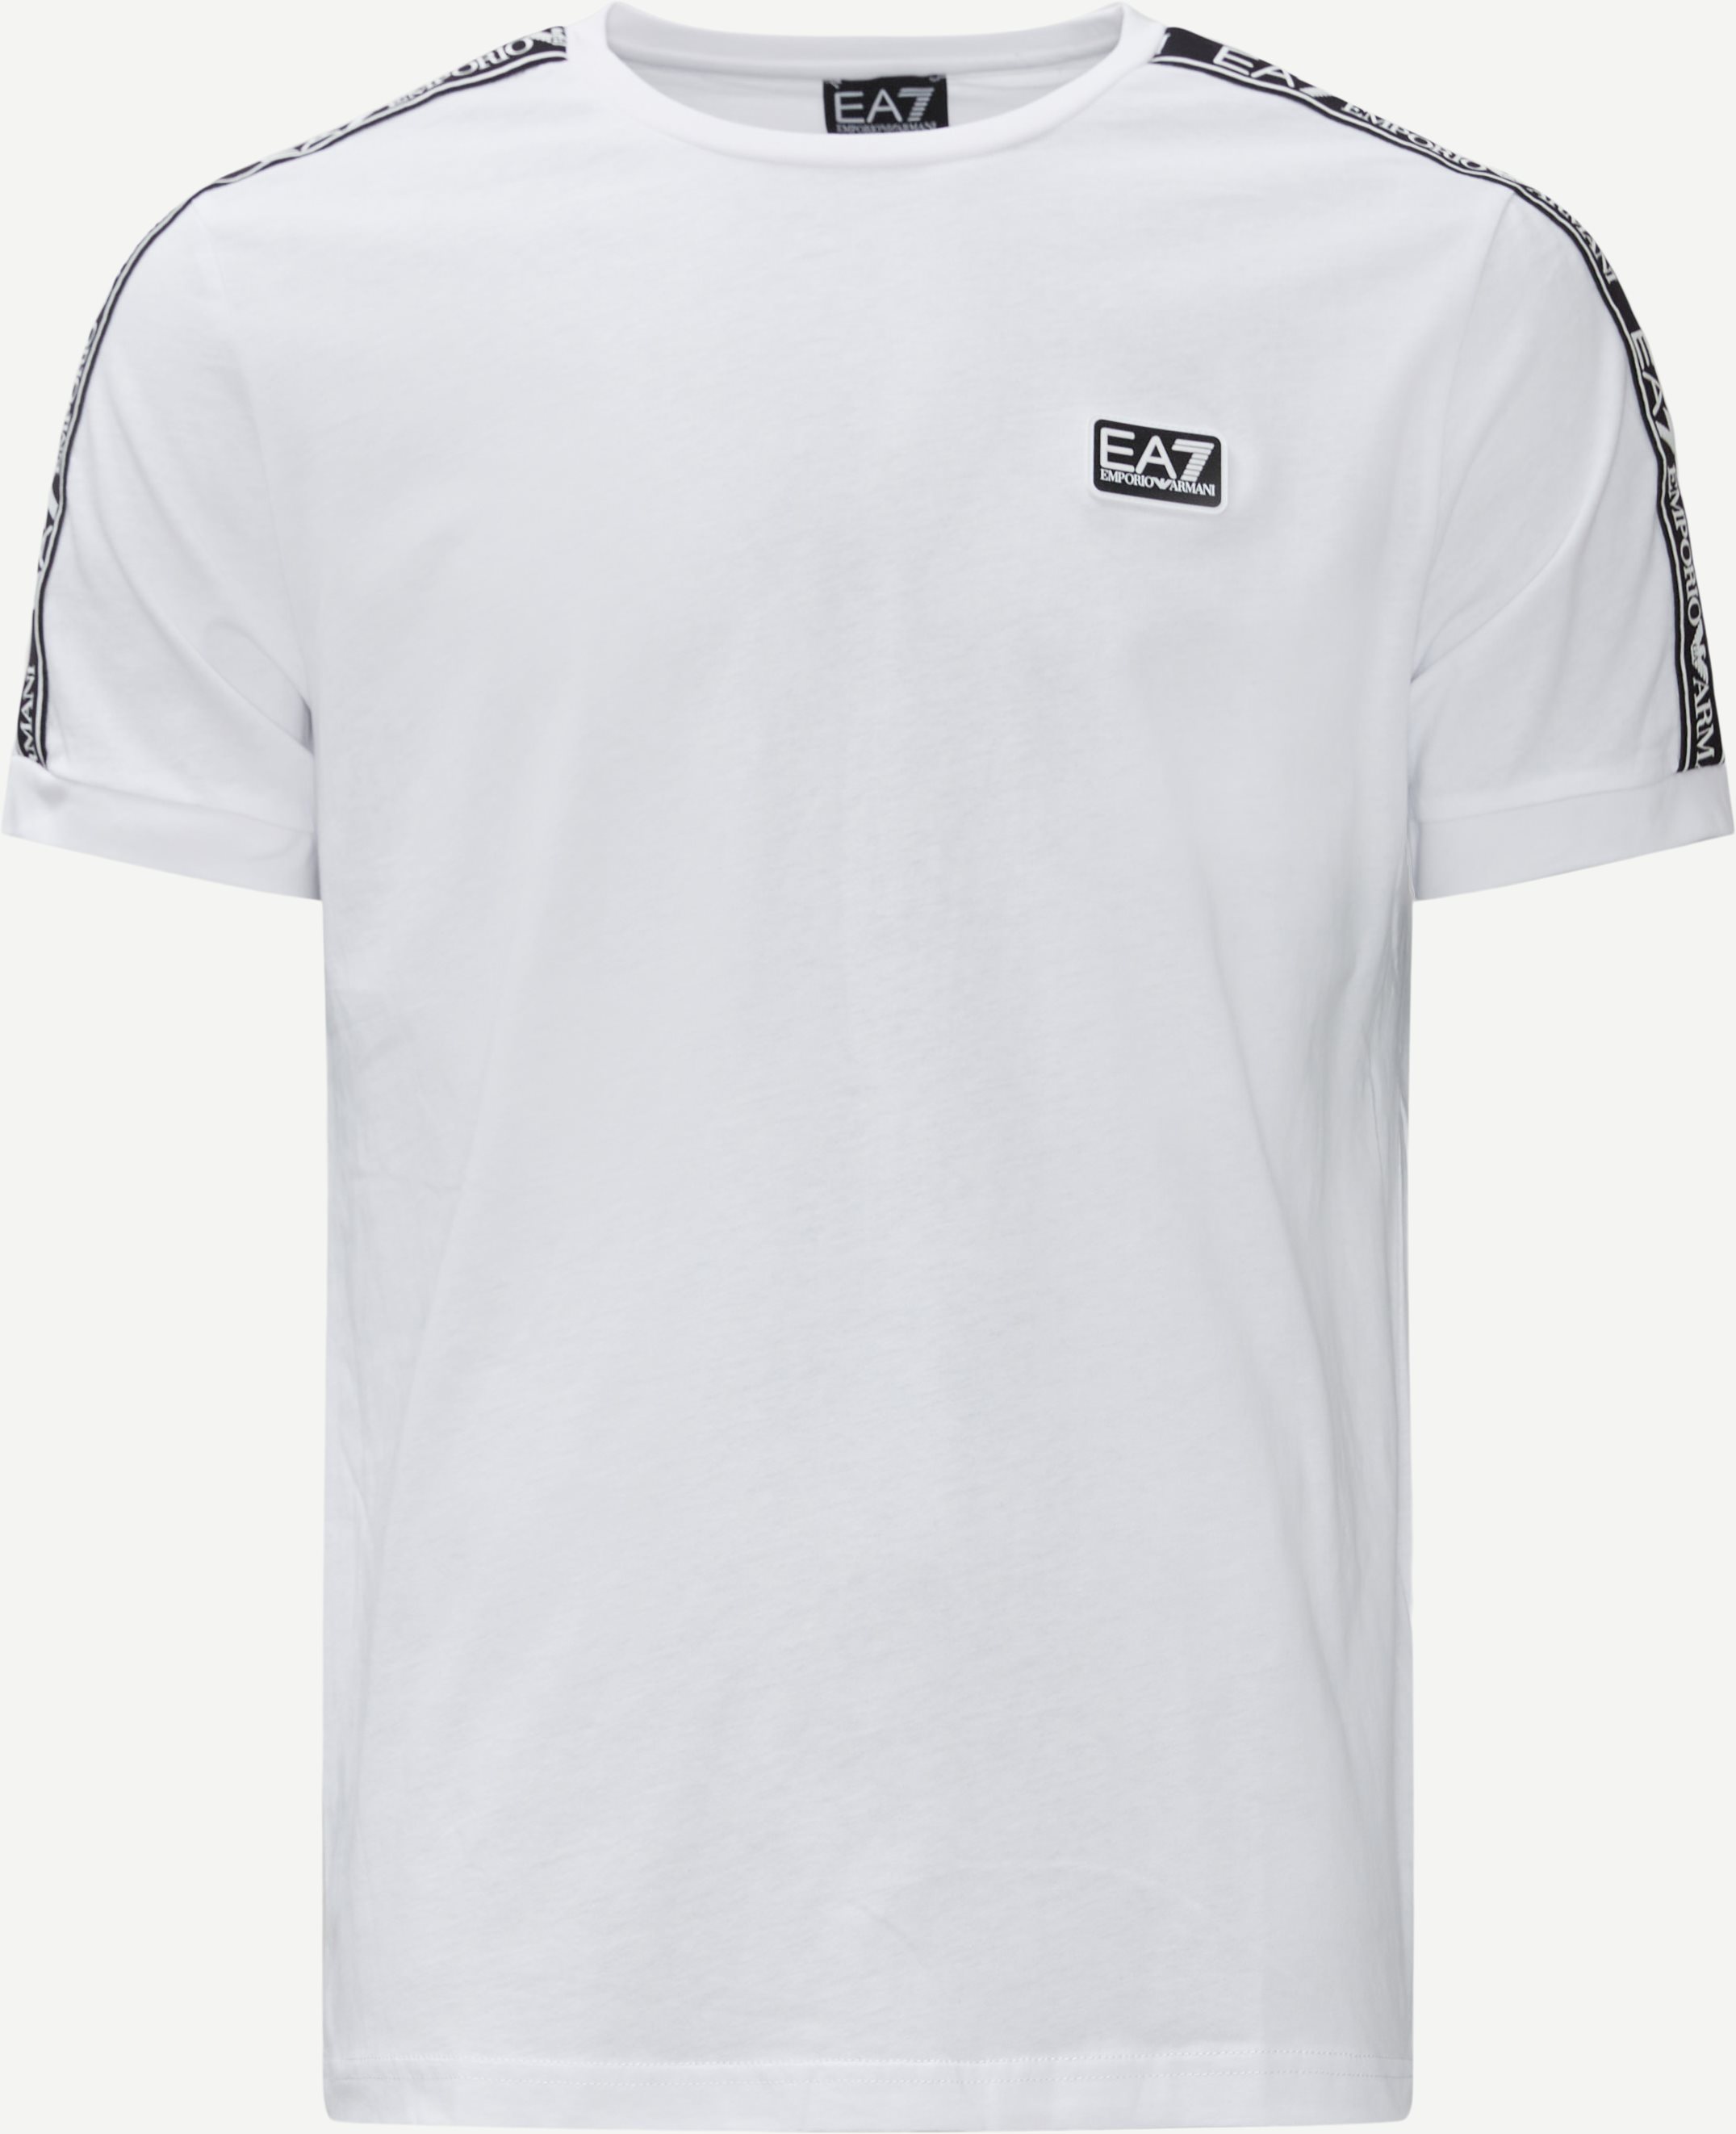 3LPT18 T-shirt - T-shirts - Regular fit - Hvid